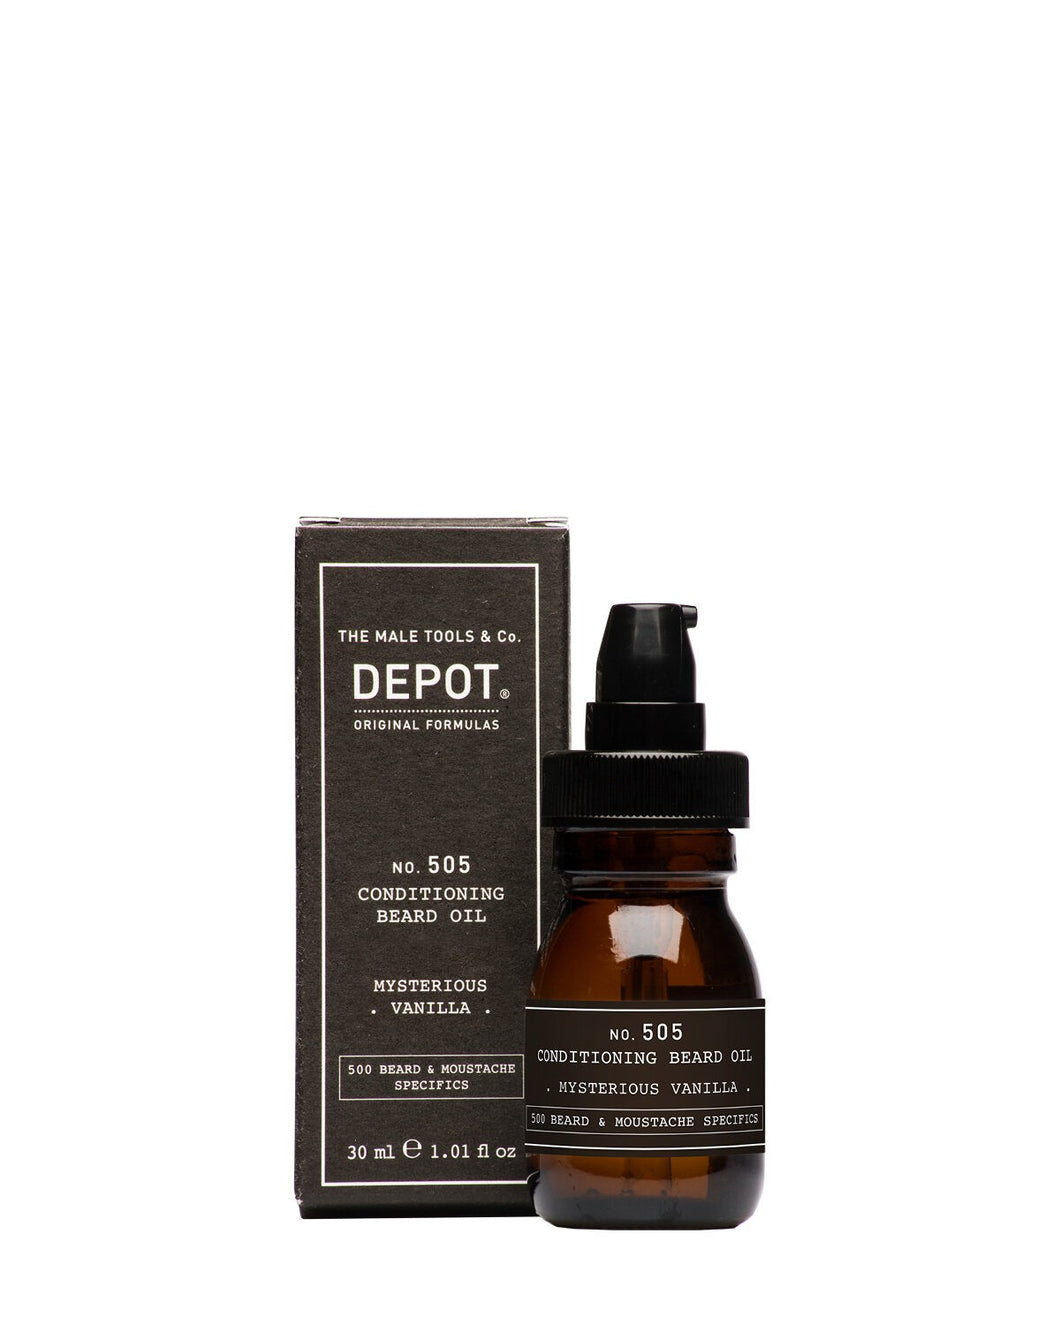 Depot- Conditioning Beard Oil 505